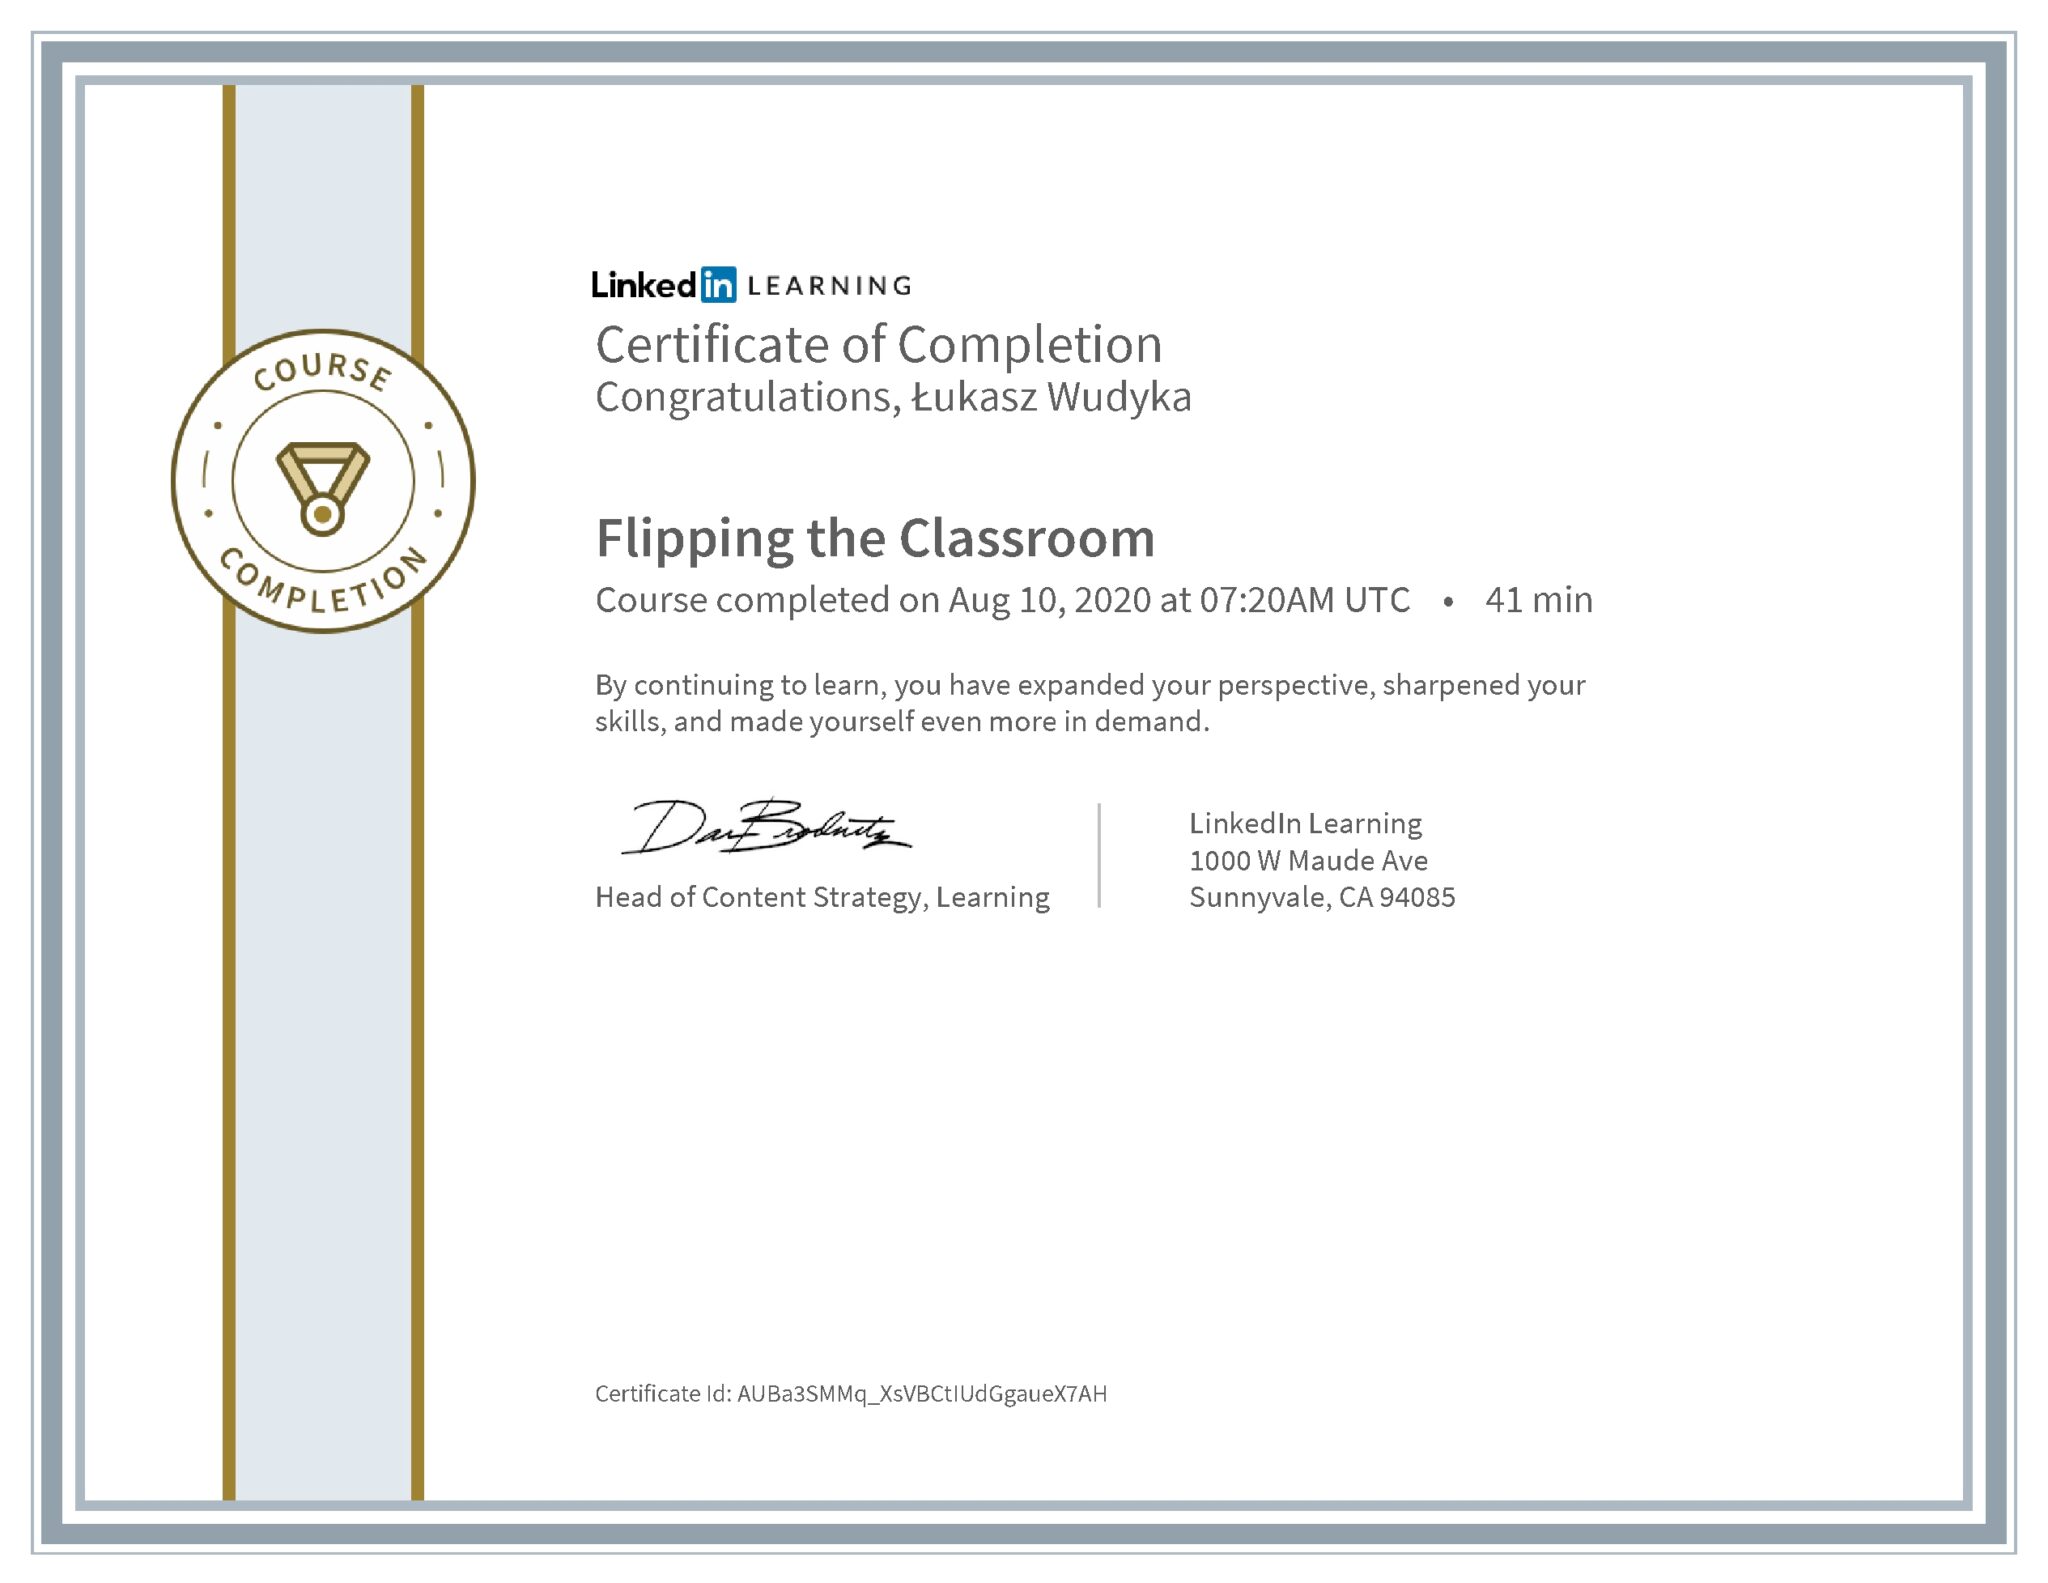 Łukasz Wudyka certyfikat LinkedIn Flipping the Classroom